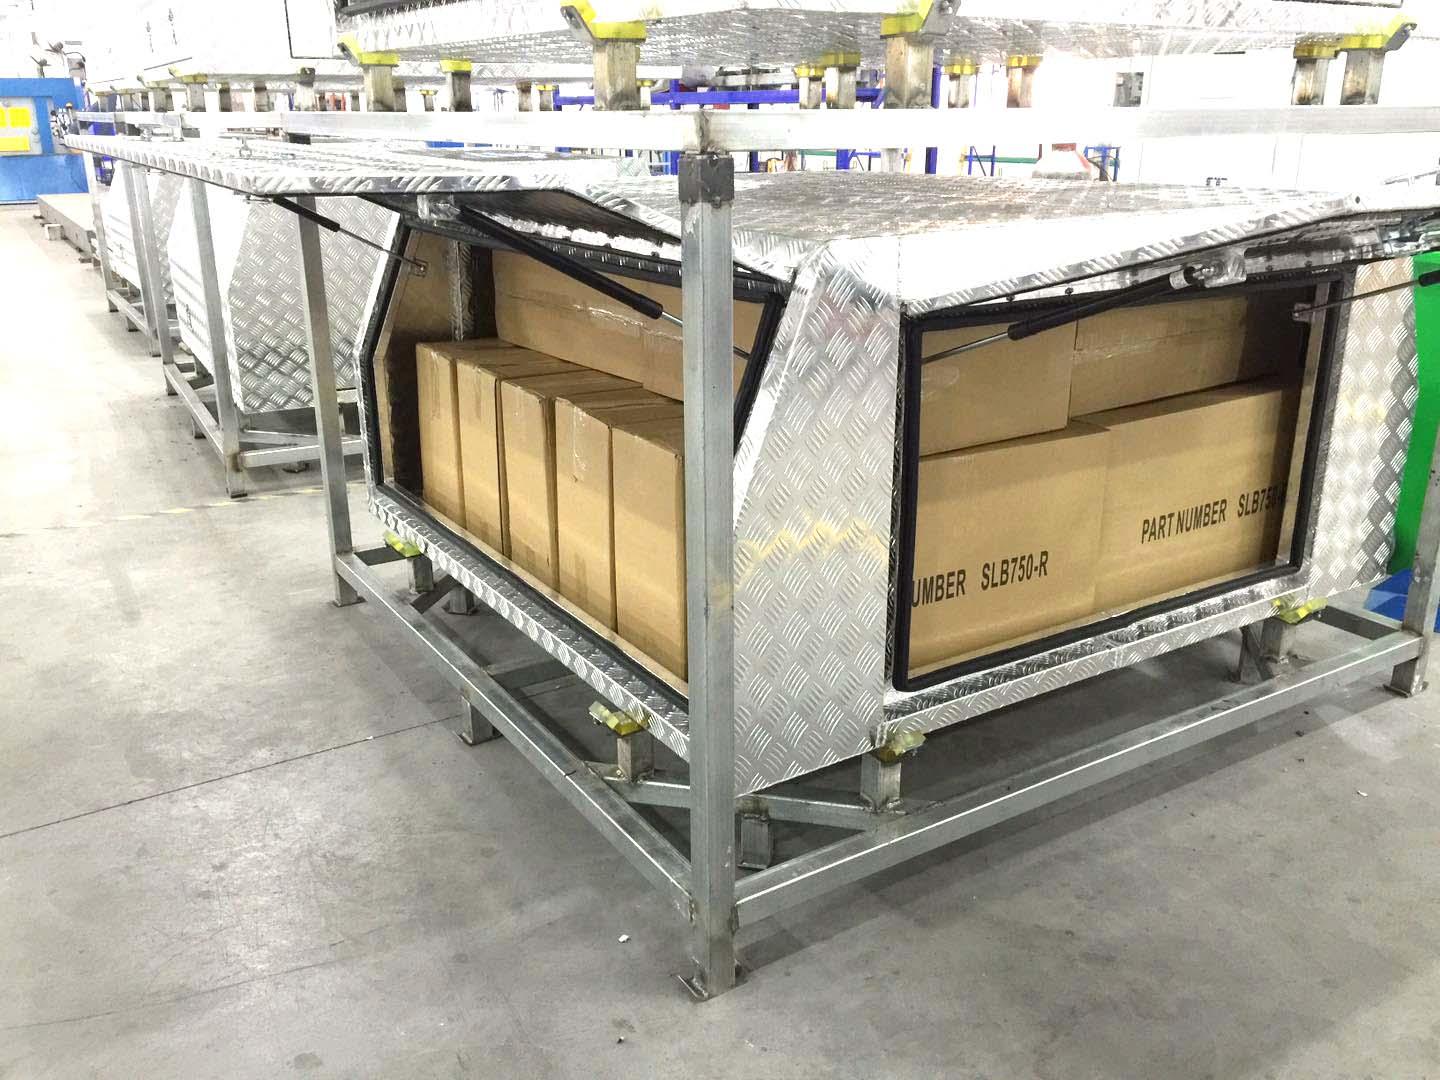 Snowaves Mechanical aluminum aluminum truck tool boxes factory for picnics